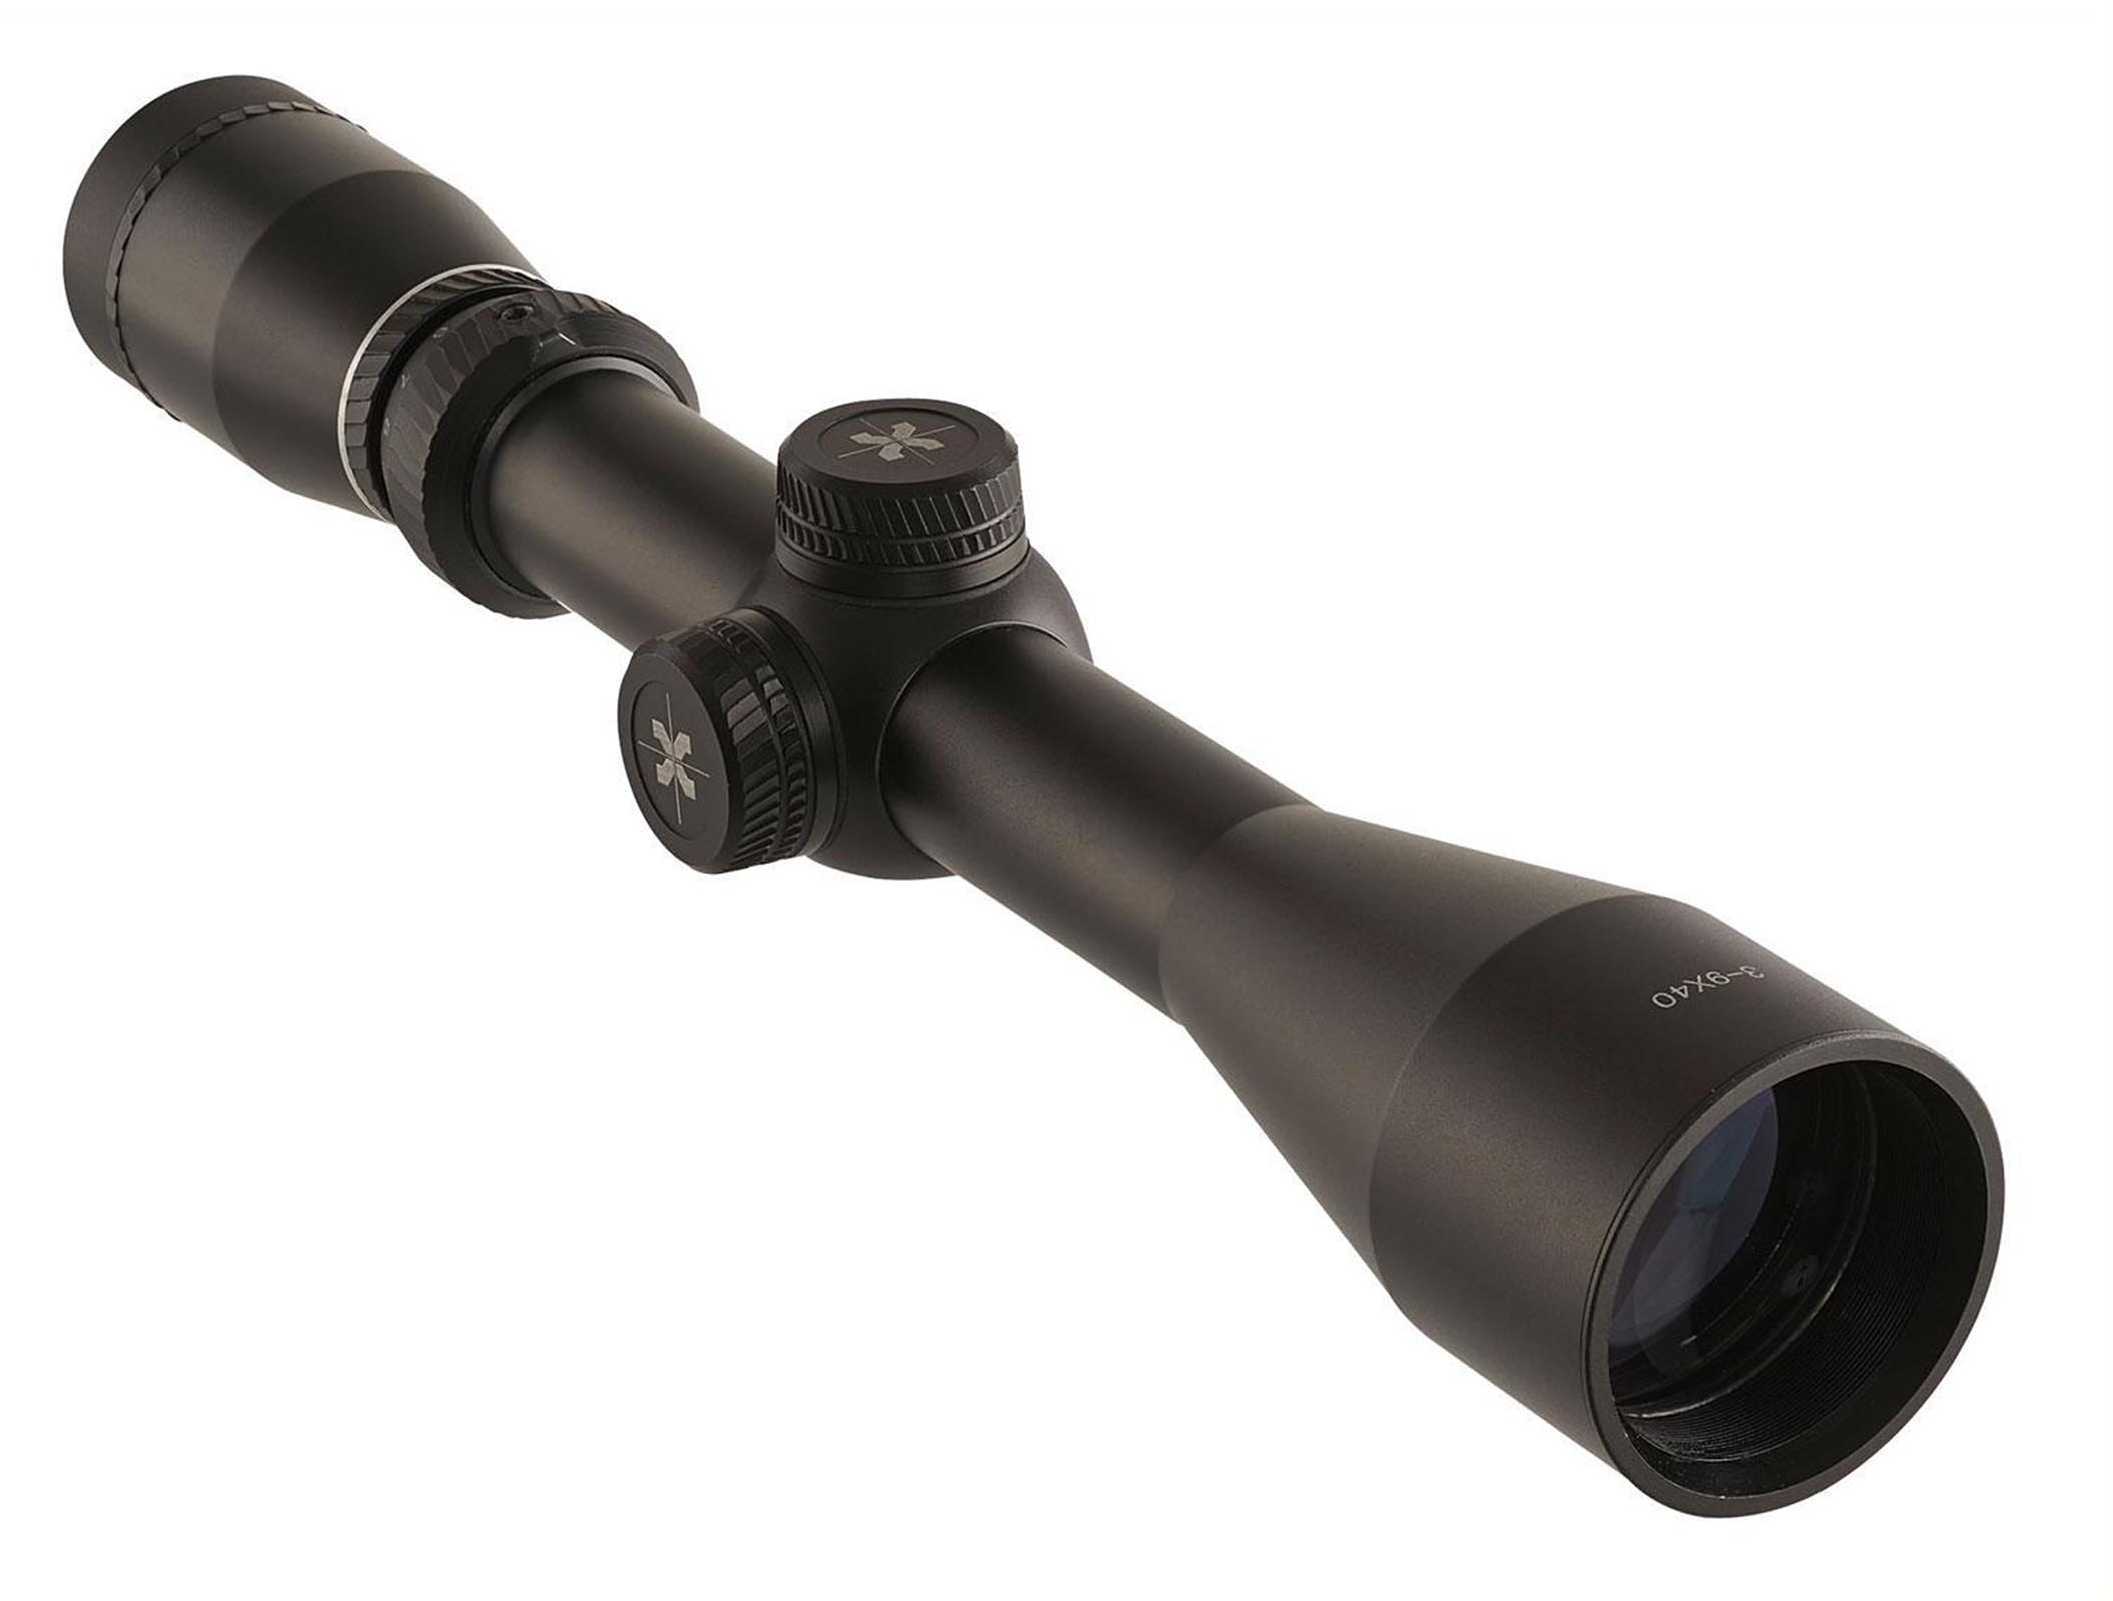 Hunting Series Riflescope 3-9x40mm, 1" Main Tube, Plex Reticle, Matte Black